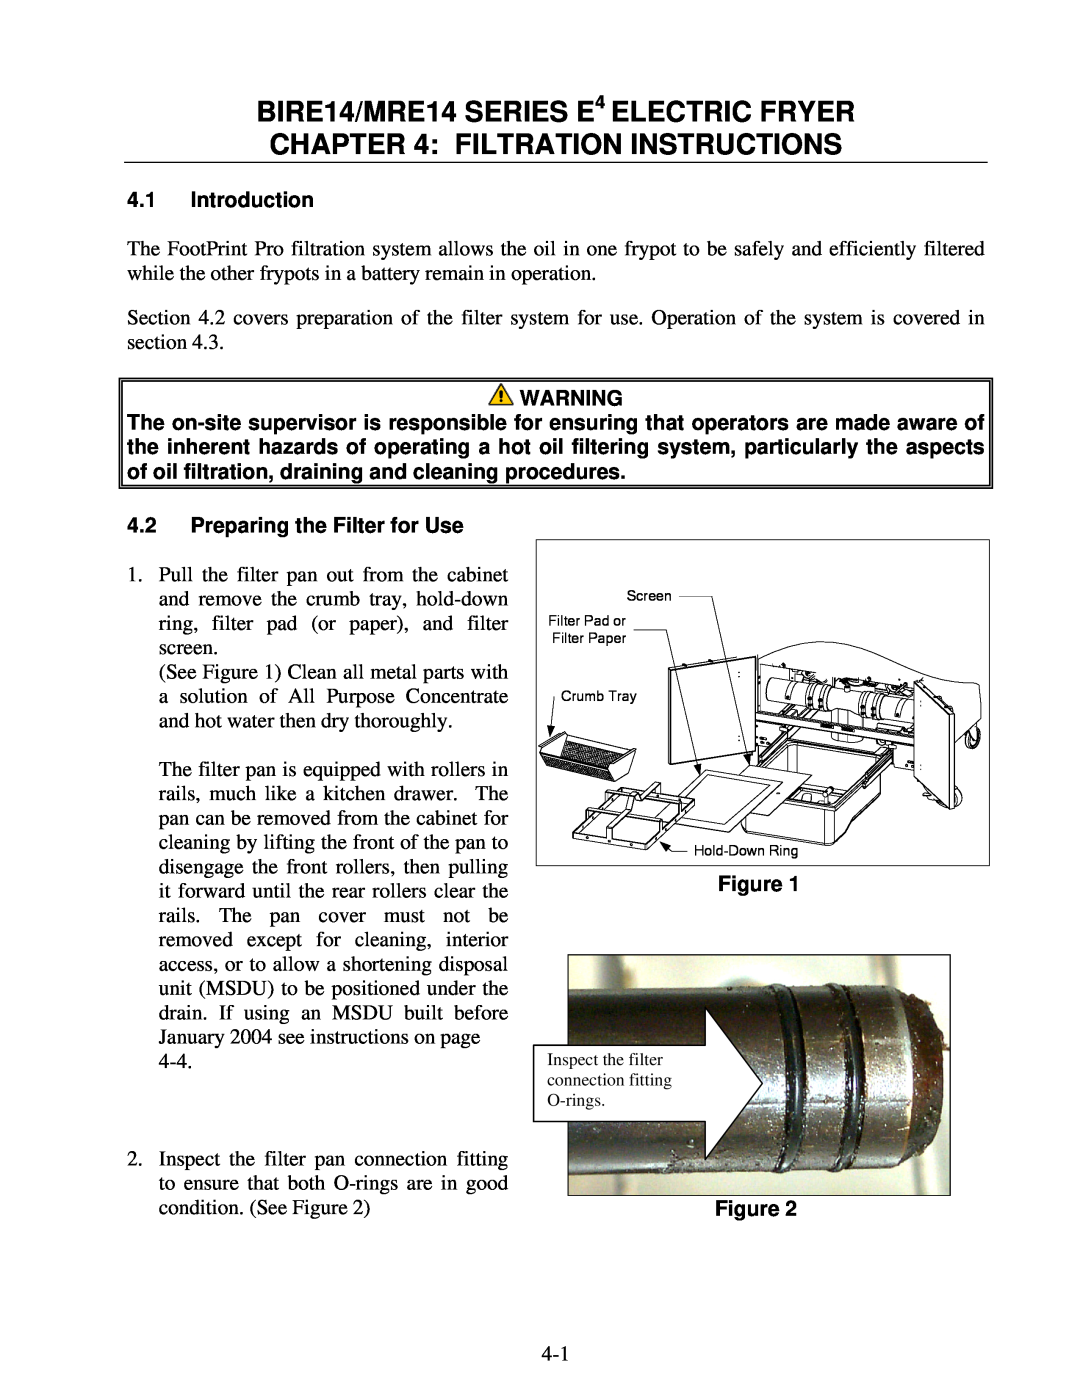 Frymaster warranty Filtration Instructions, BIRE14/MRE14 SERIES E4 ELECTRIC FRYER, 4.1Introduction, Figure 